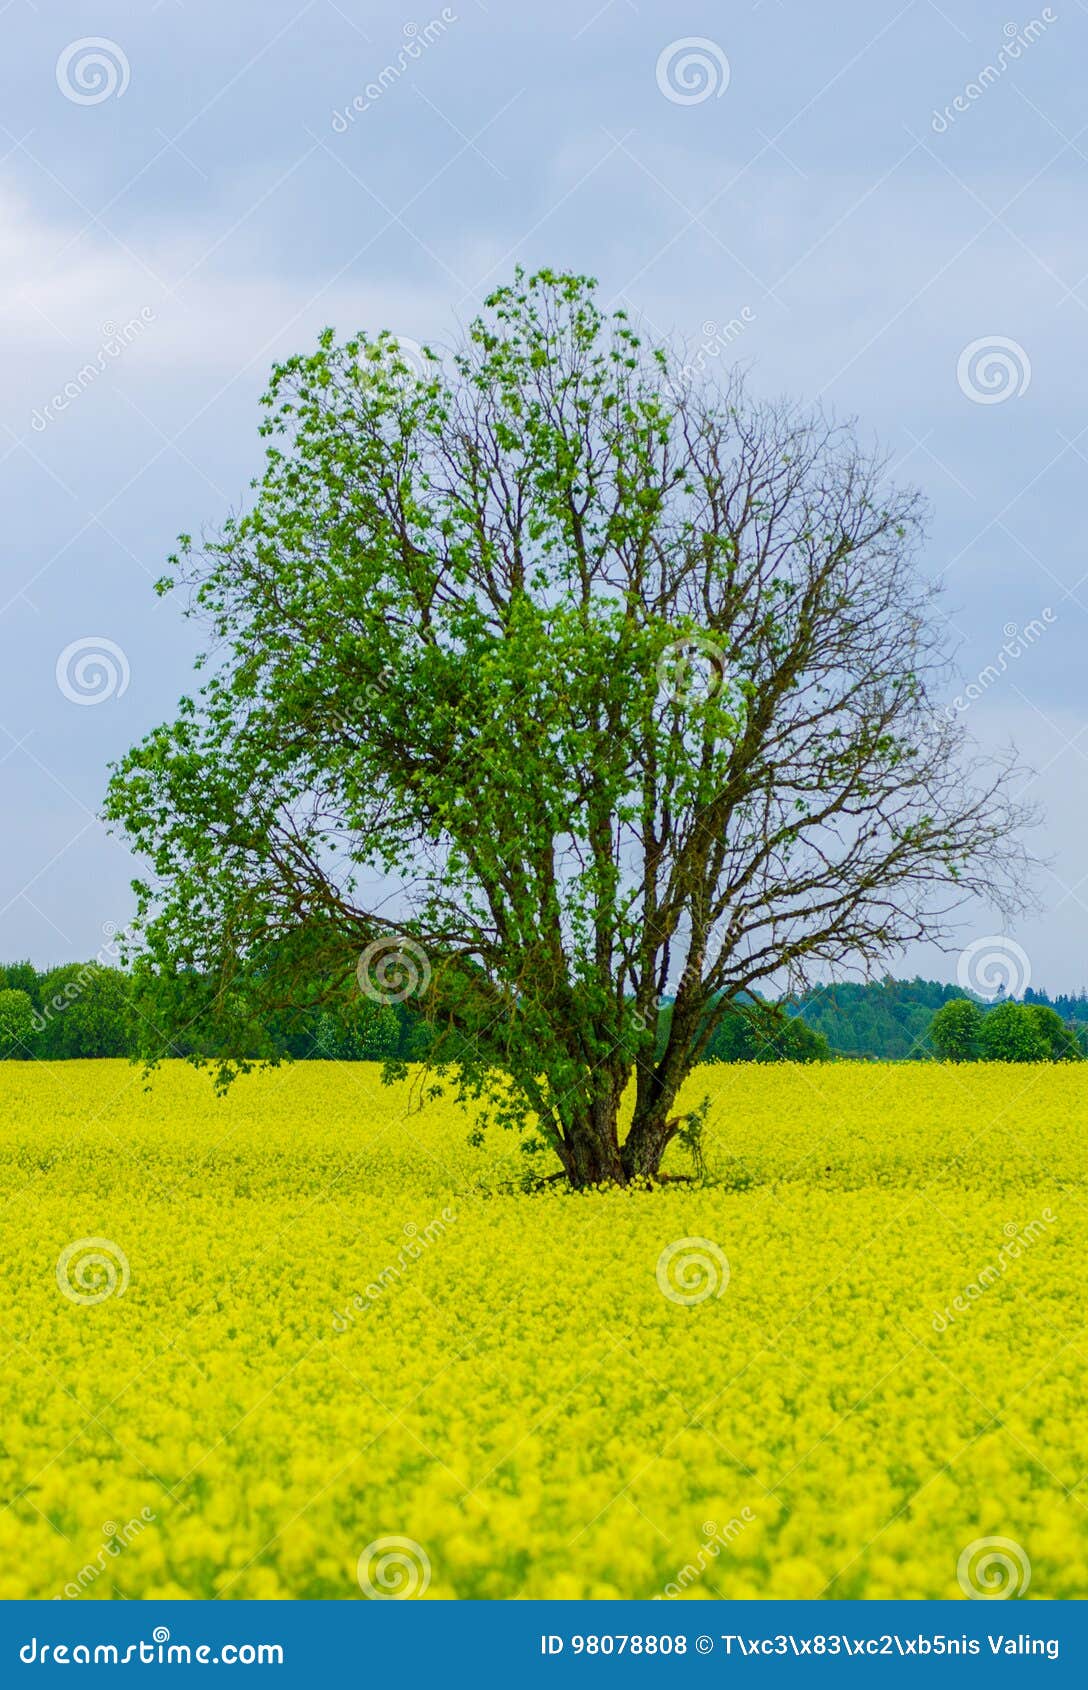 Tree and raps field stock photo. Image of empty, beautiful - 98078808